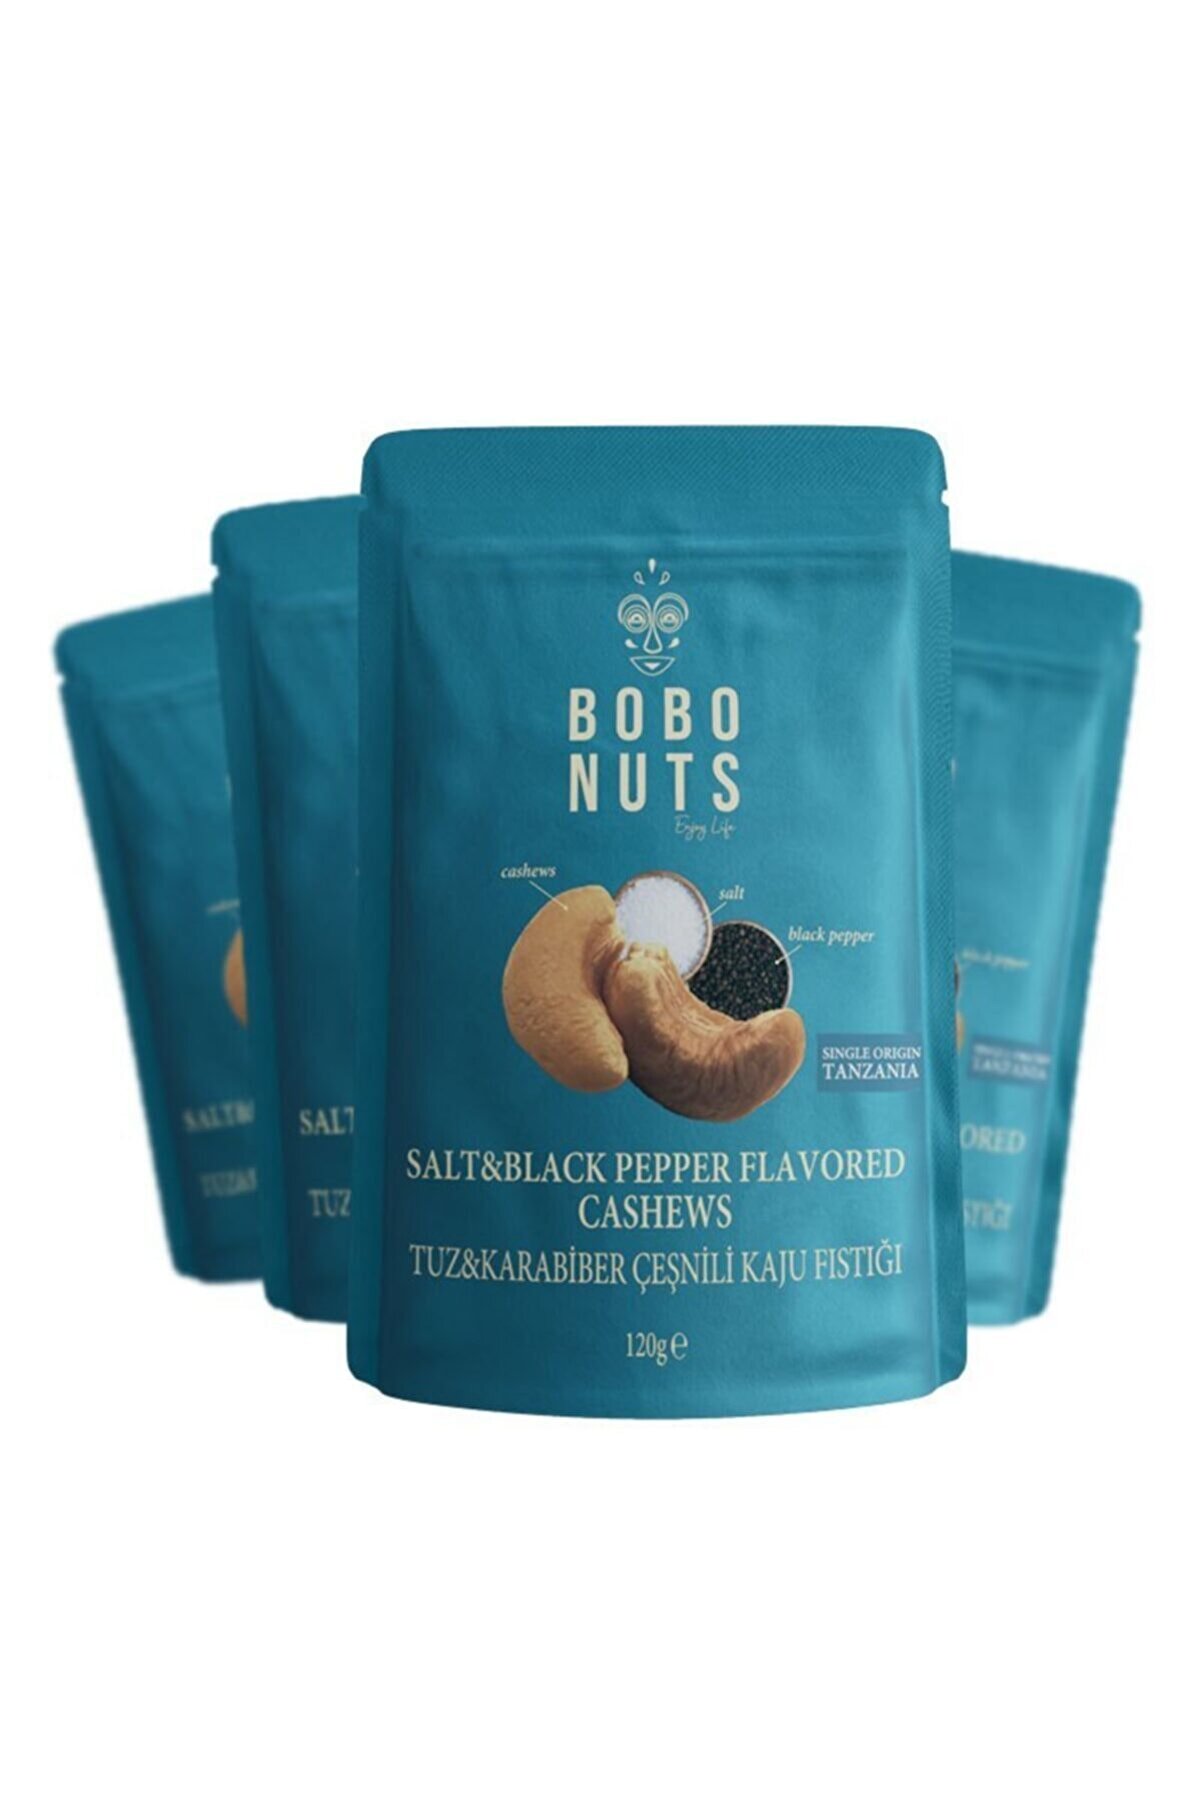 Bobonuts Bobo Nuts Tuz & Karabiber Çeşnili / Soslu Kaju Fıstığı 120g X 4 Paket